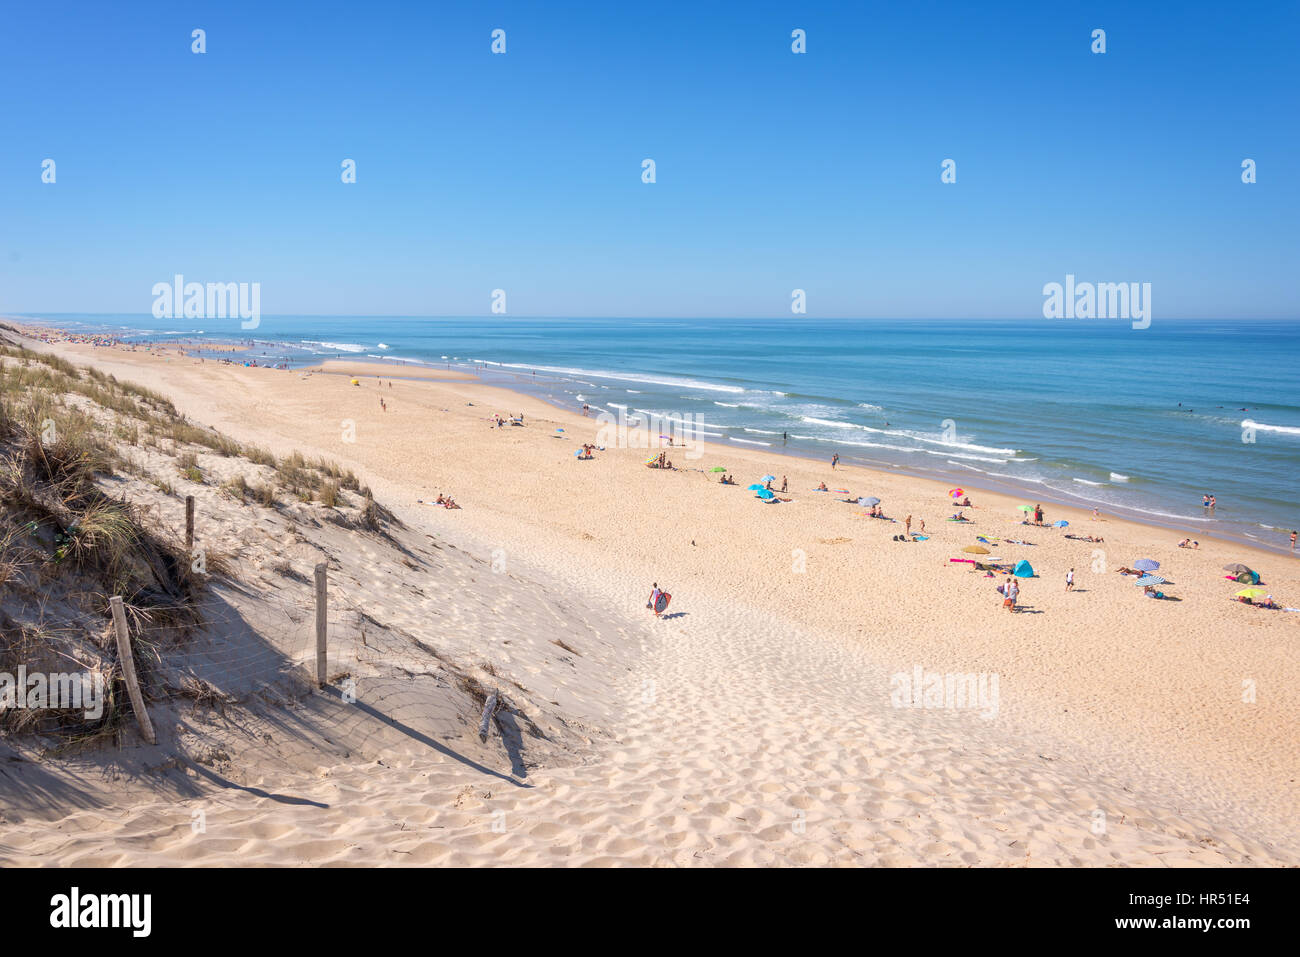 The dune and the beach of Lacanau, atlantic ocean, France Stock Photo